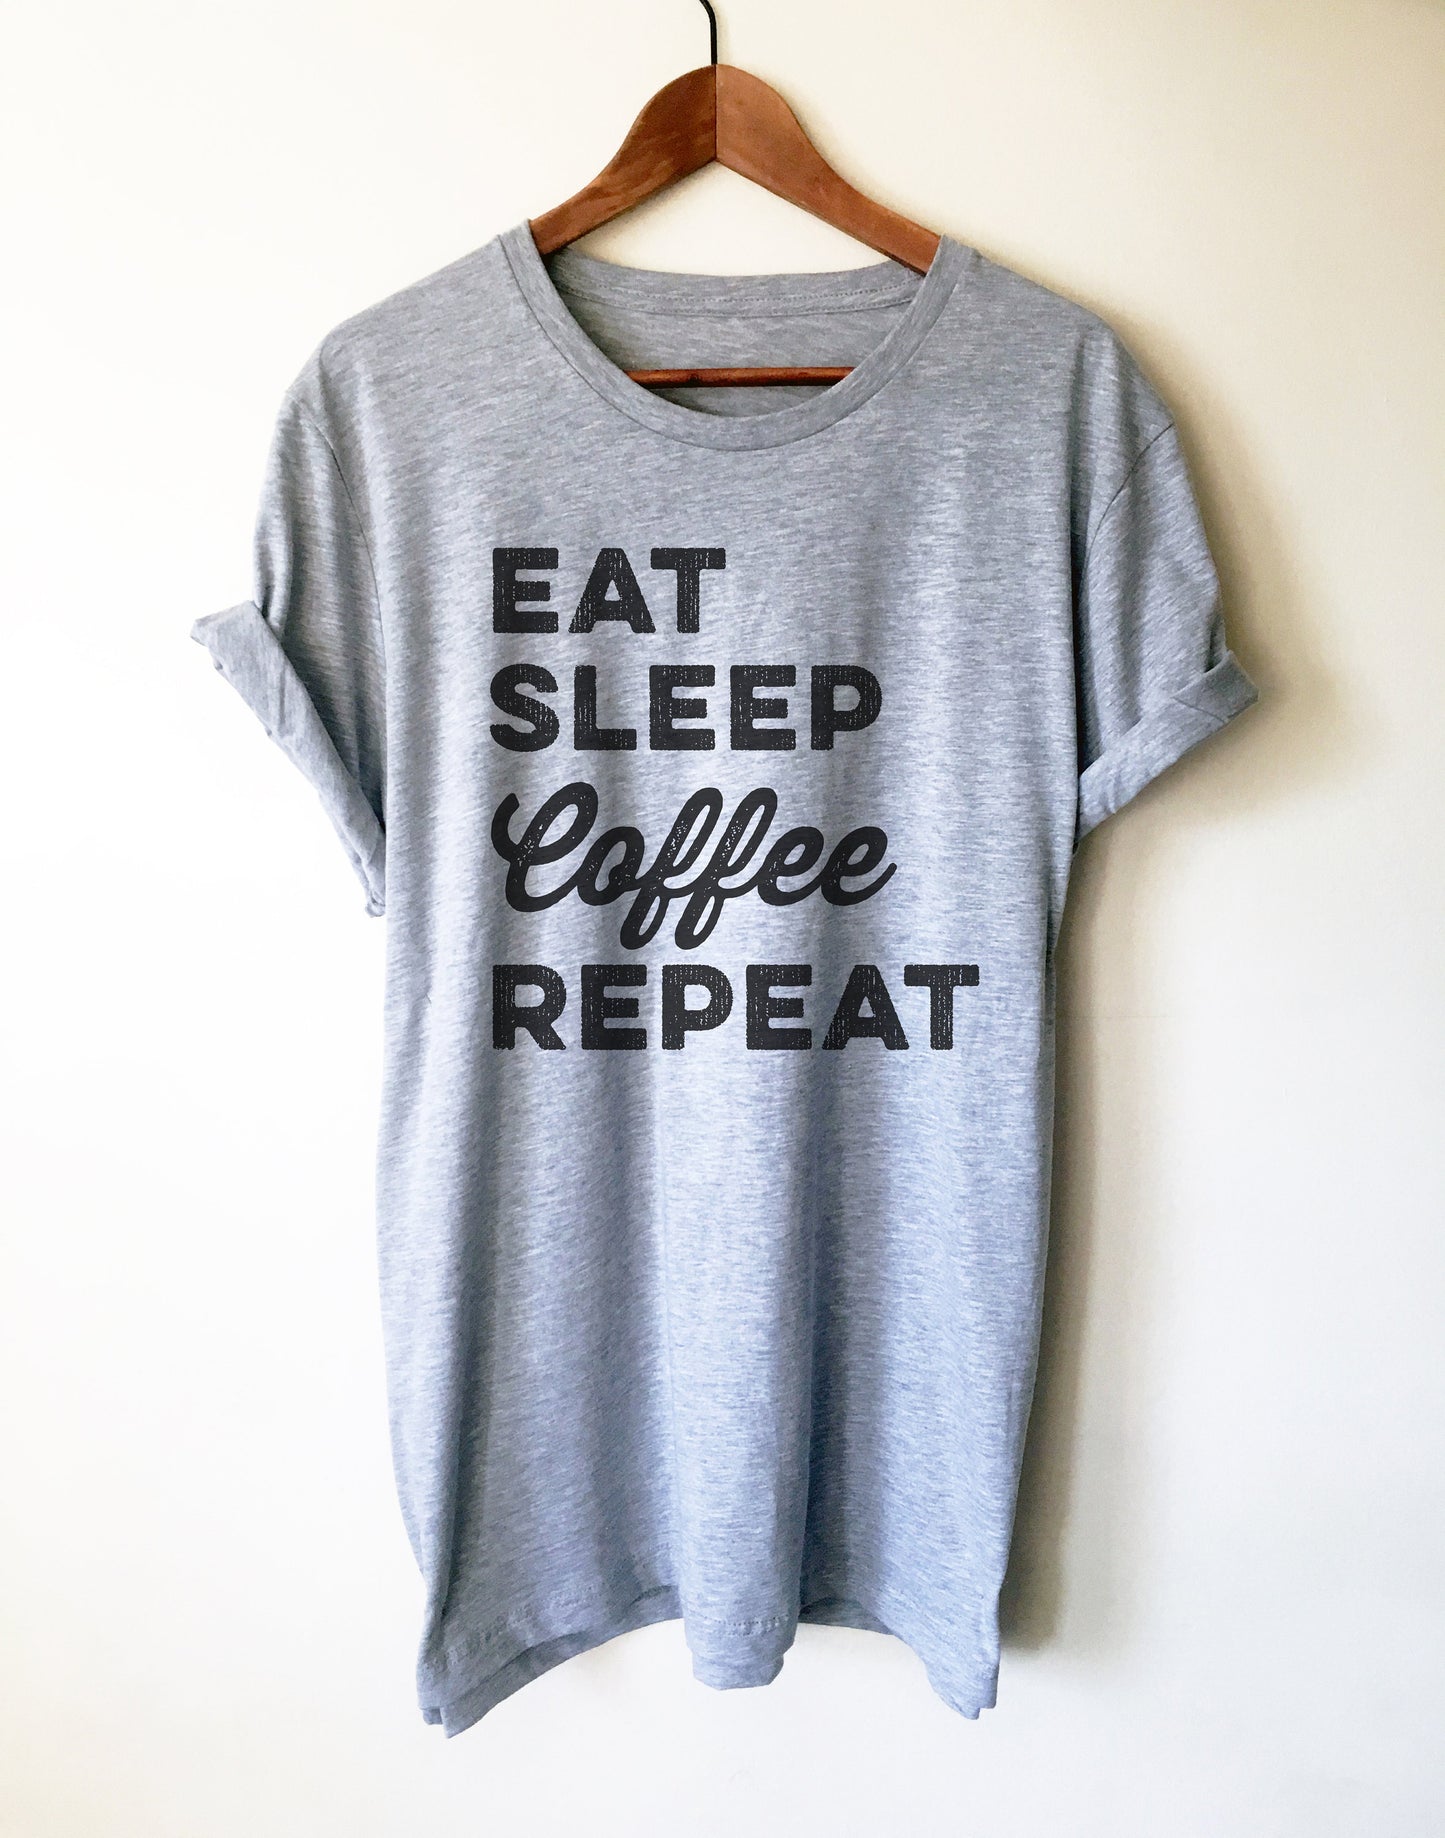 Eat Sleep Coffee Repeat Unisex Shirt - Coffee Shirt, Coffee Gift, Principal Shirt, Caffeine Shirt, Coffee Funny Shirt, Coffee Lovers Gift